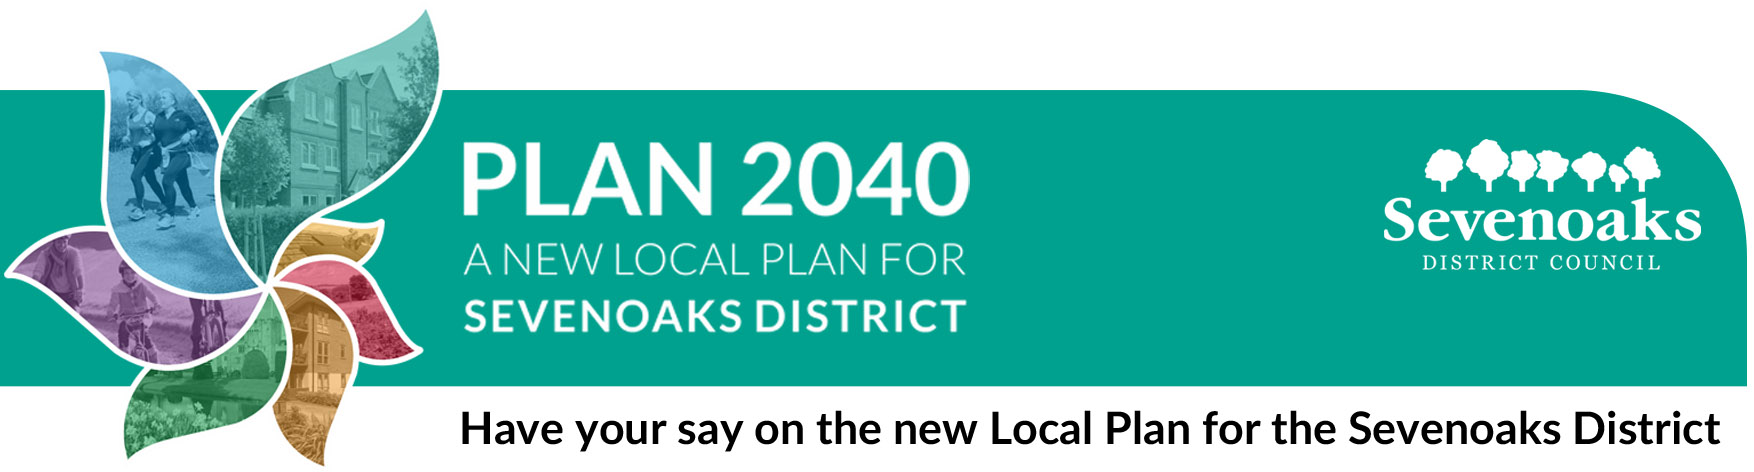 Plan 2040 A New Local Plan For Sevenoaks District